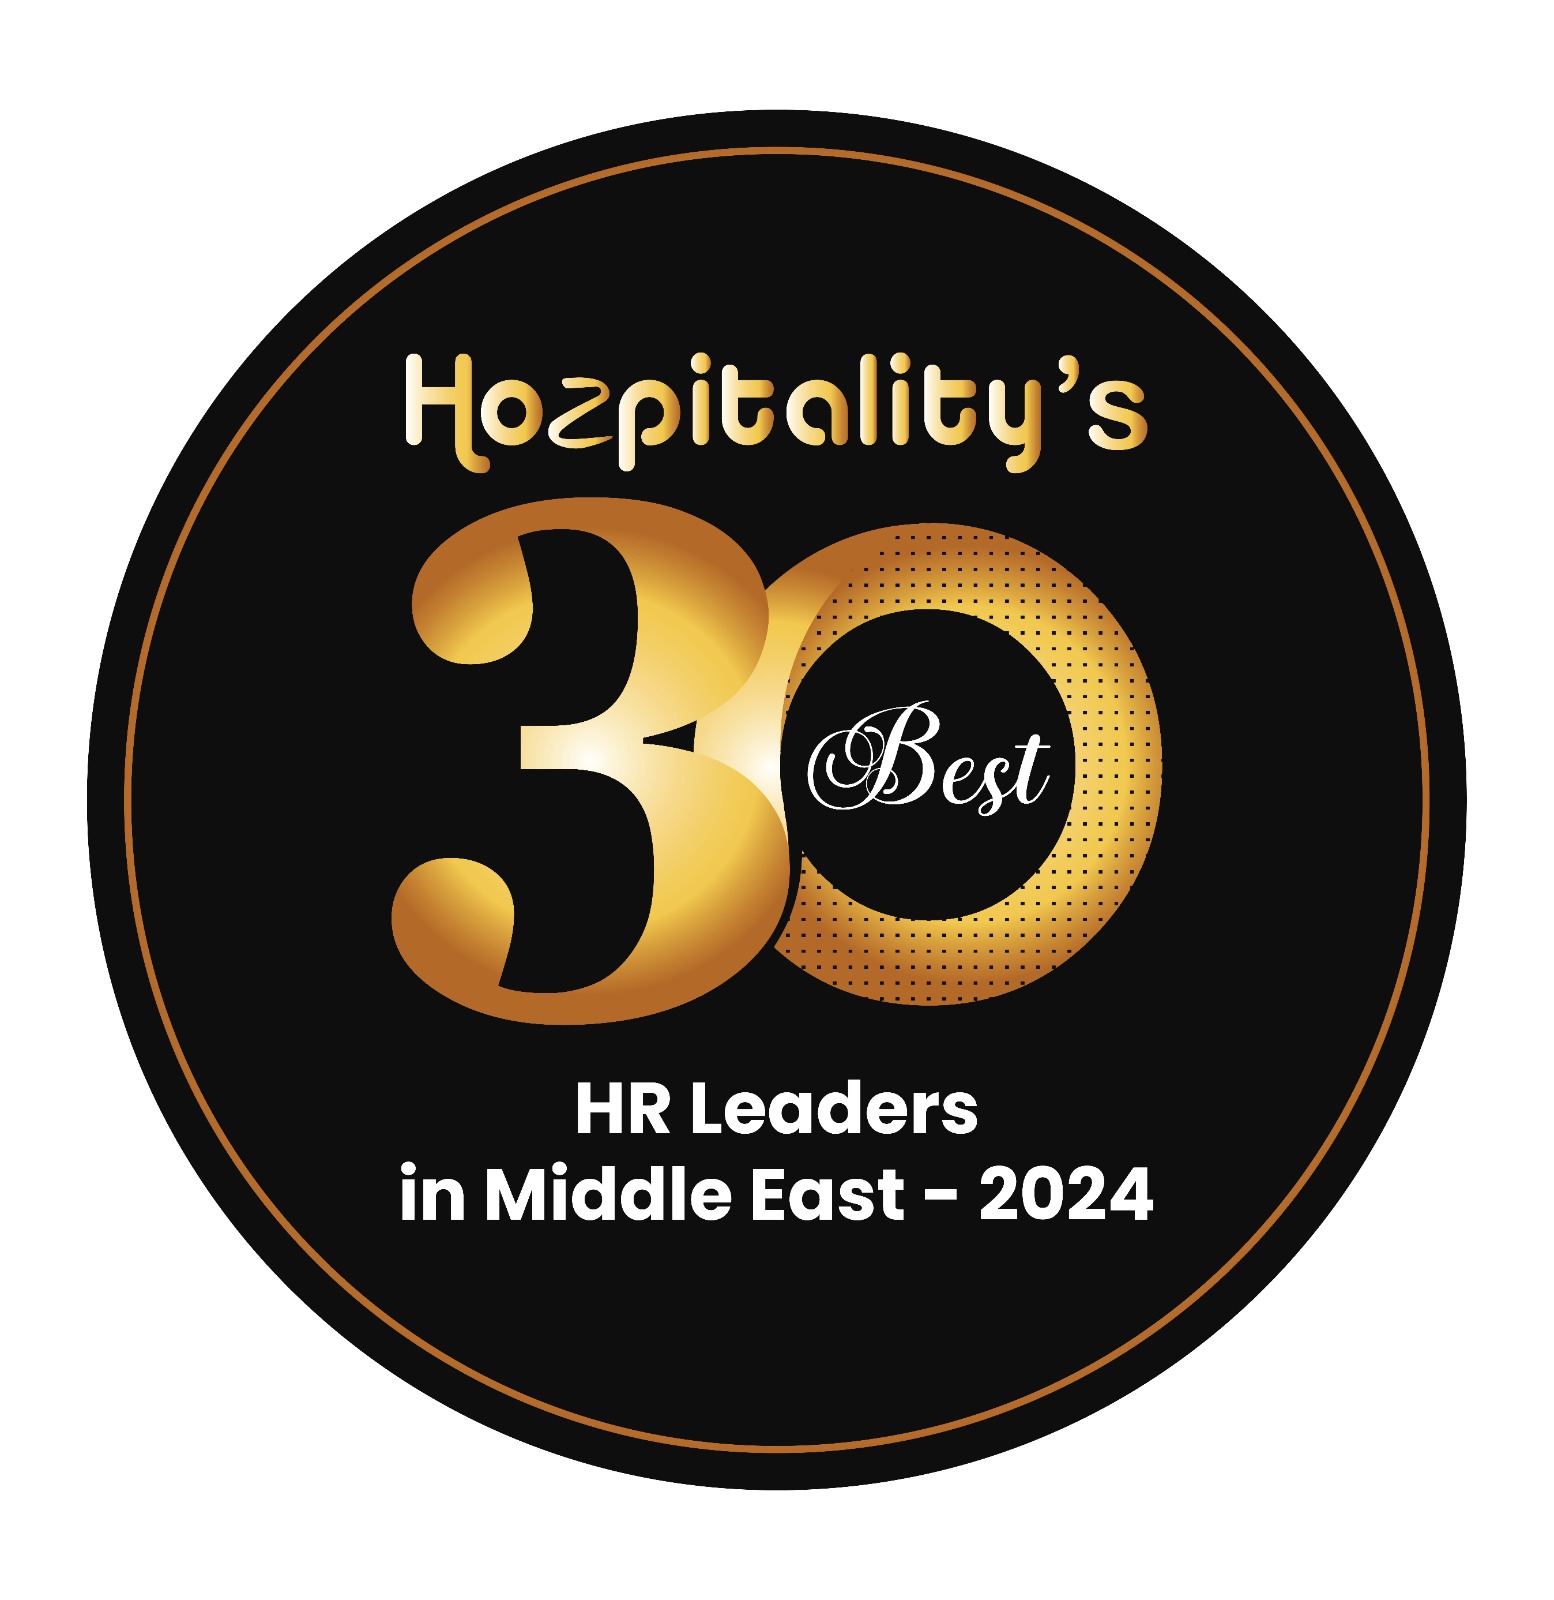 HR LEADERS Popular Hospitality Awards 2024